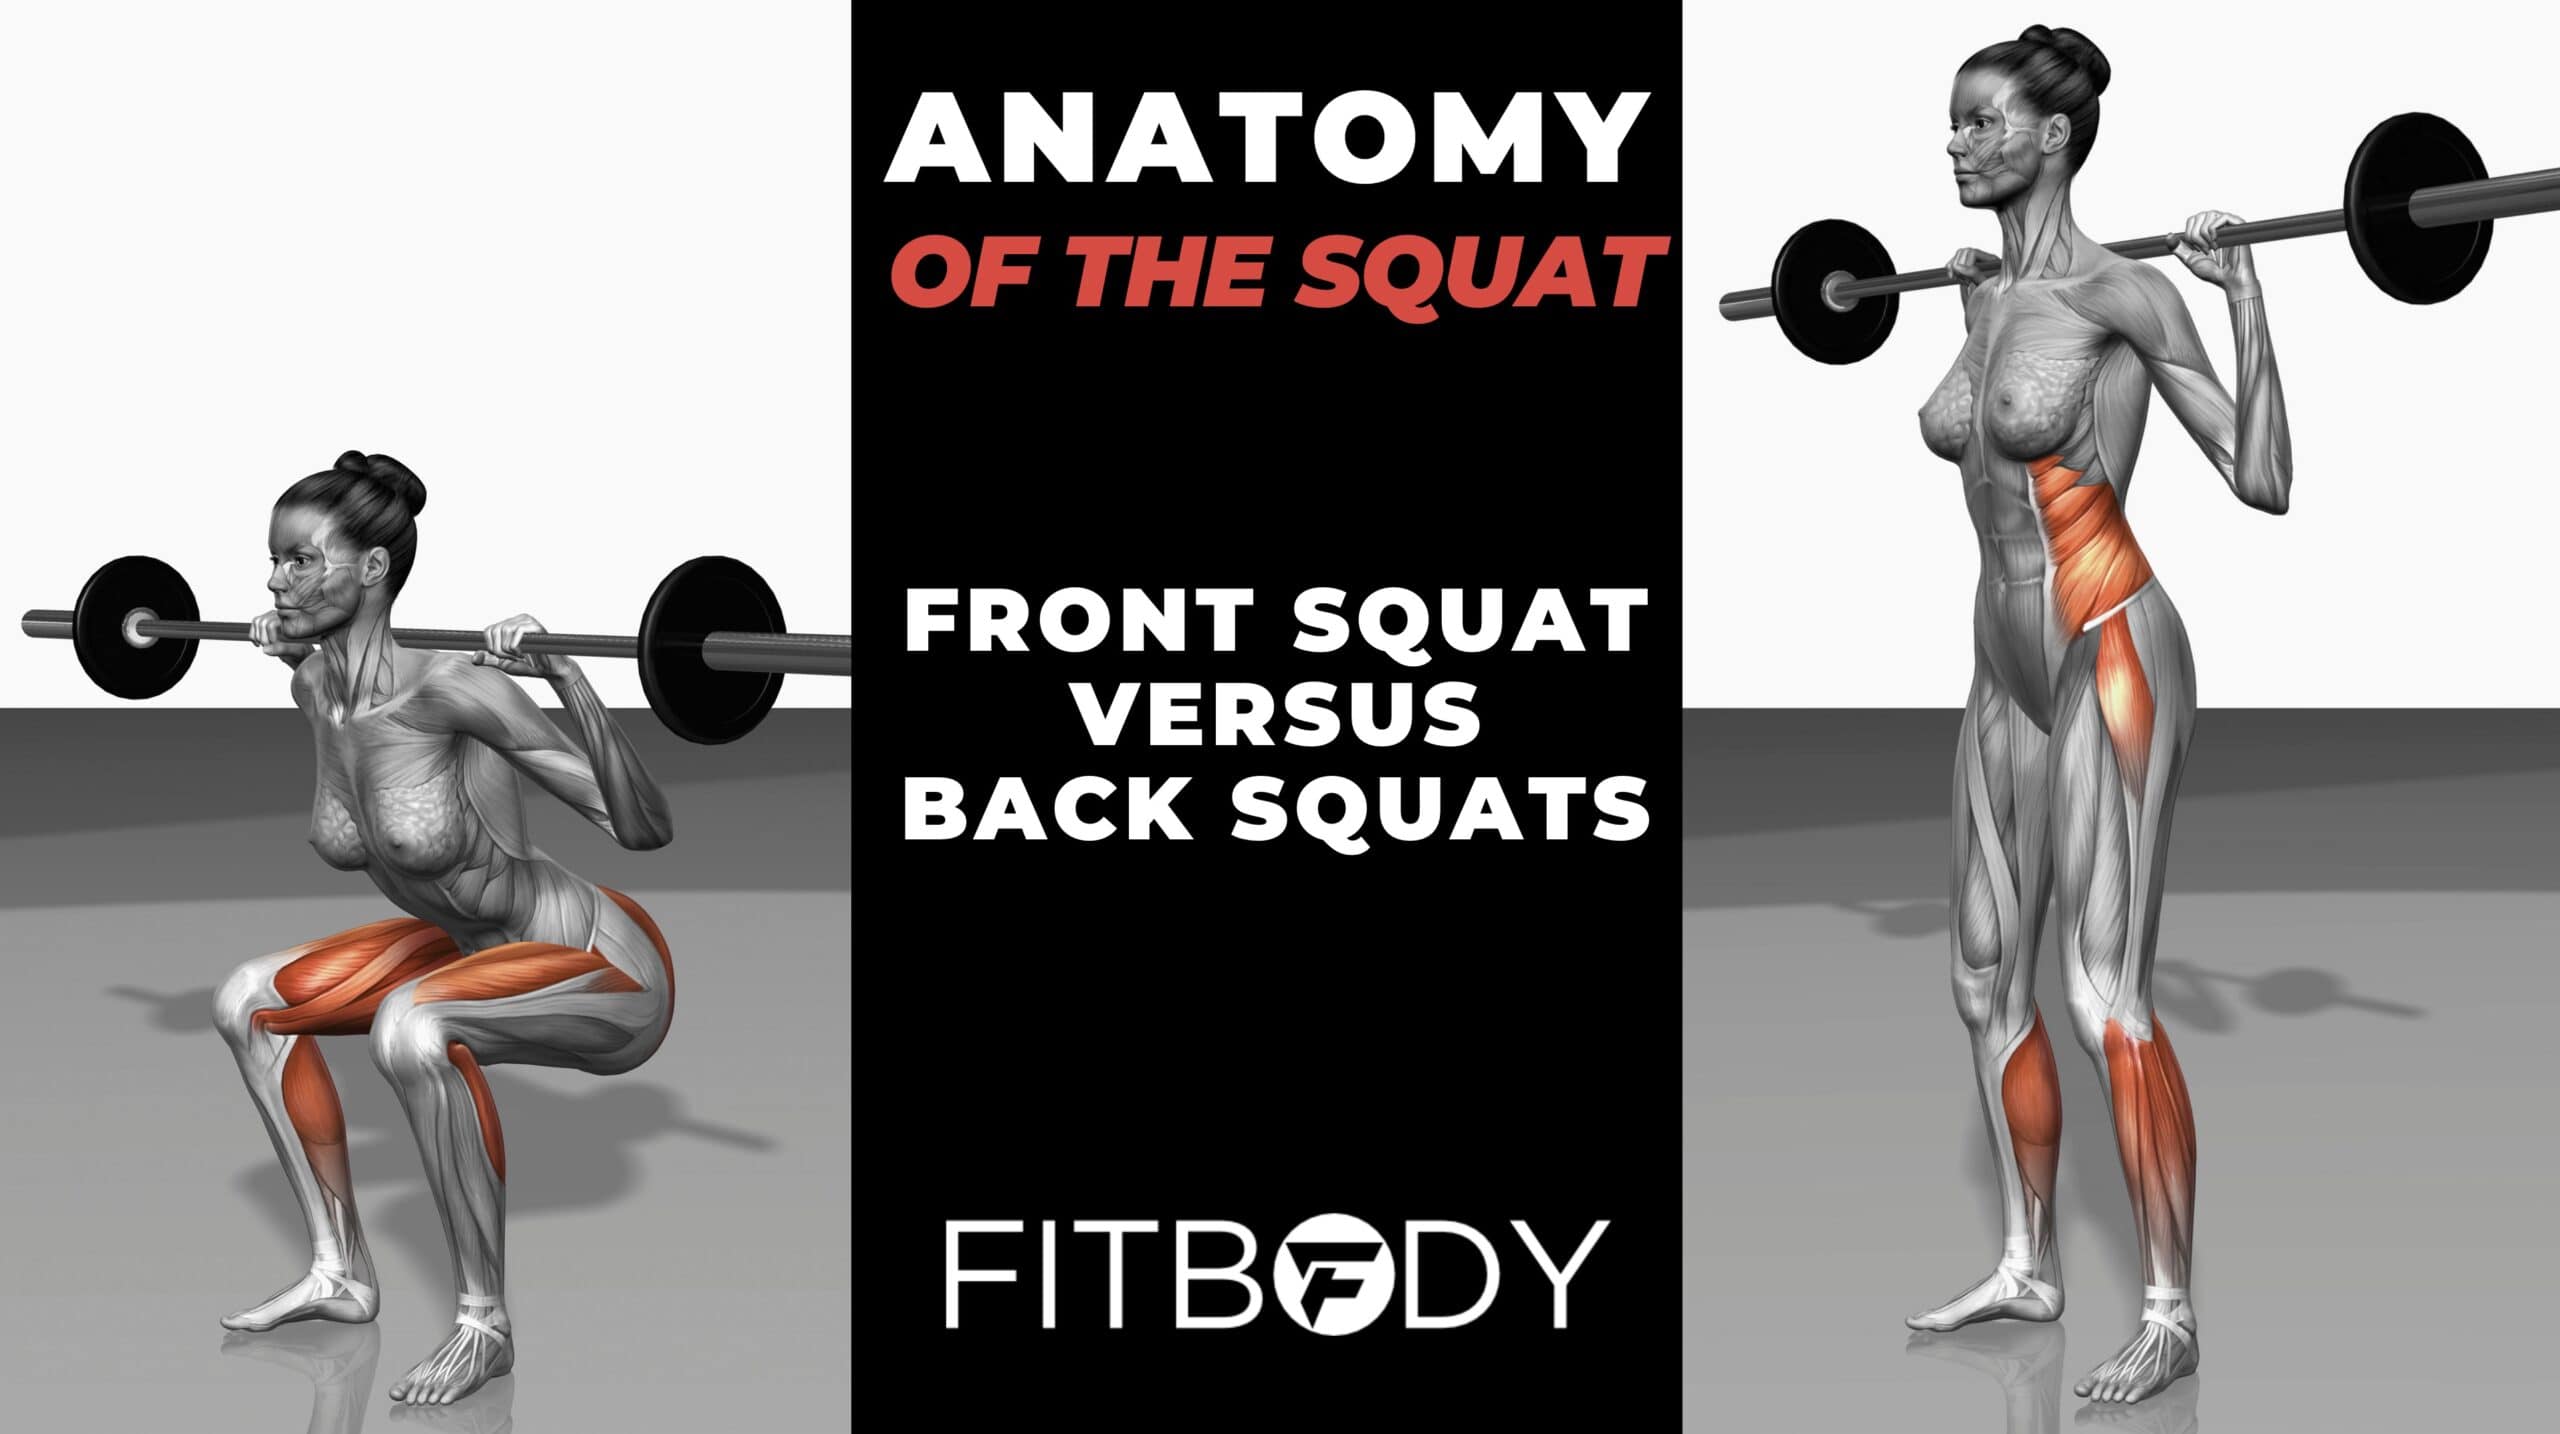 Anatomy of the squat